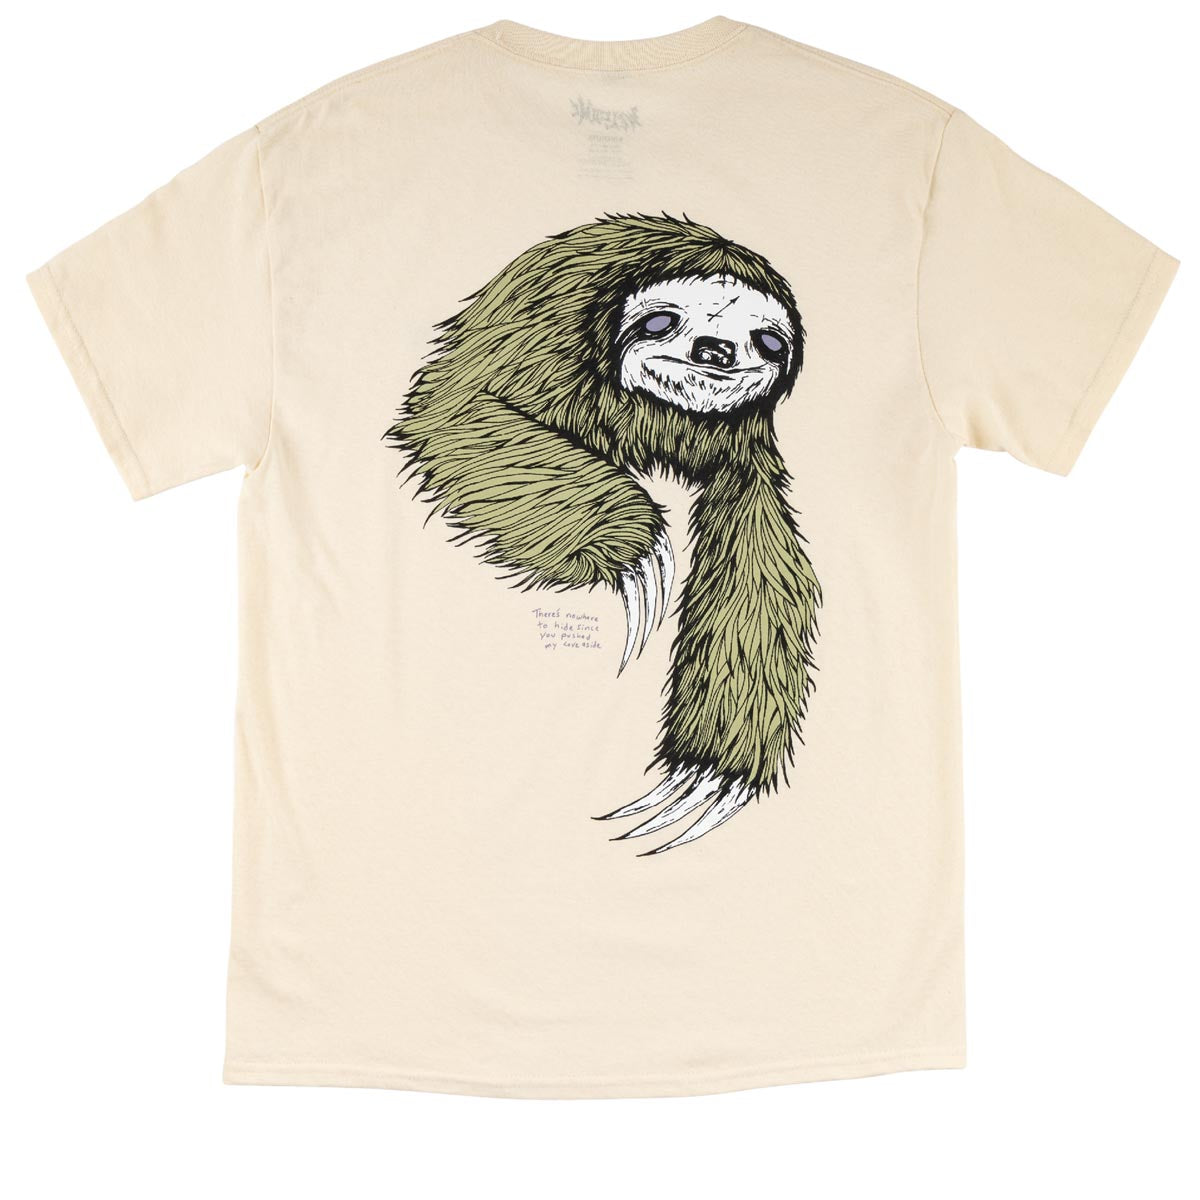 Welcome Sloth T-Shirt - Bone/Sage image 1